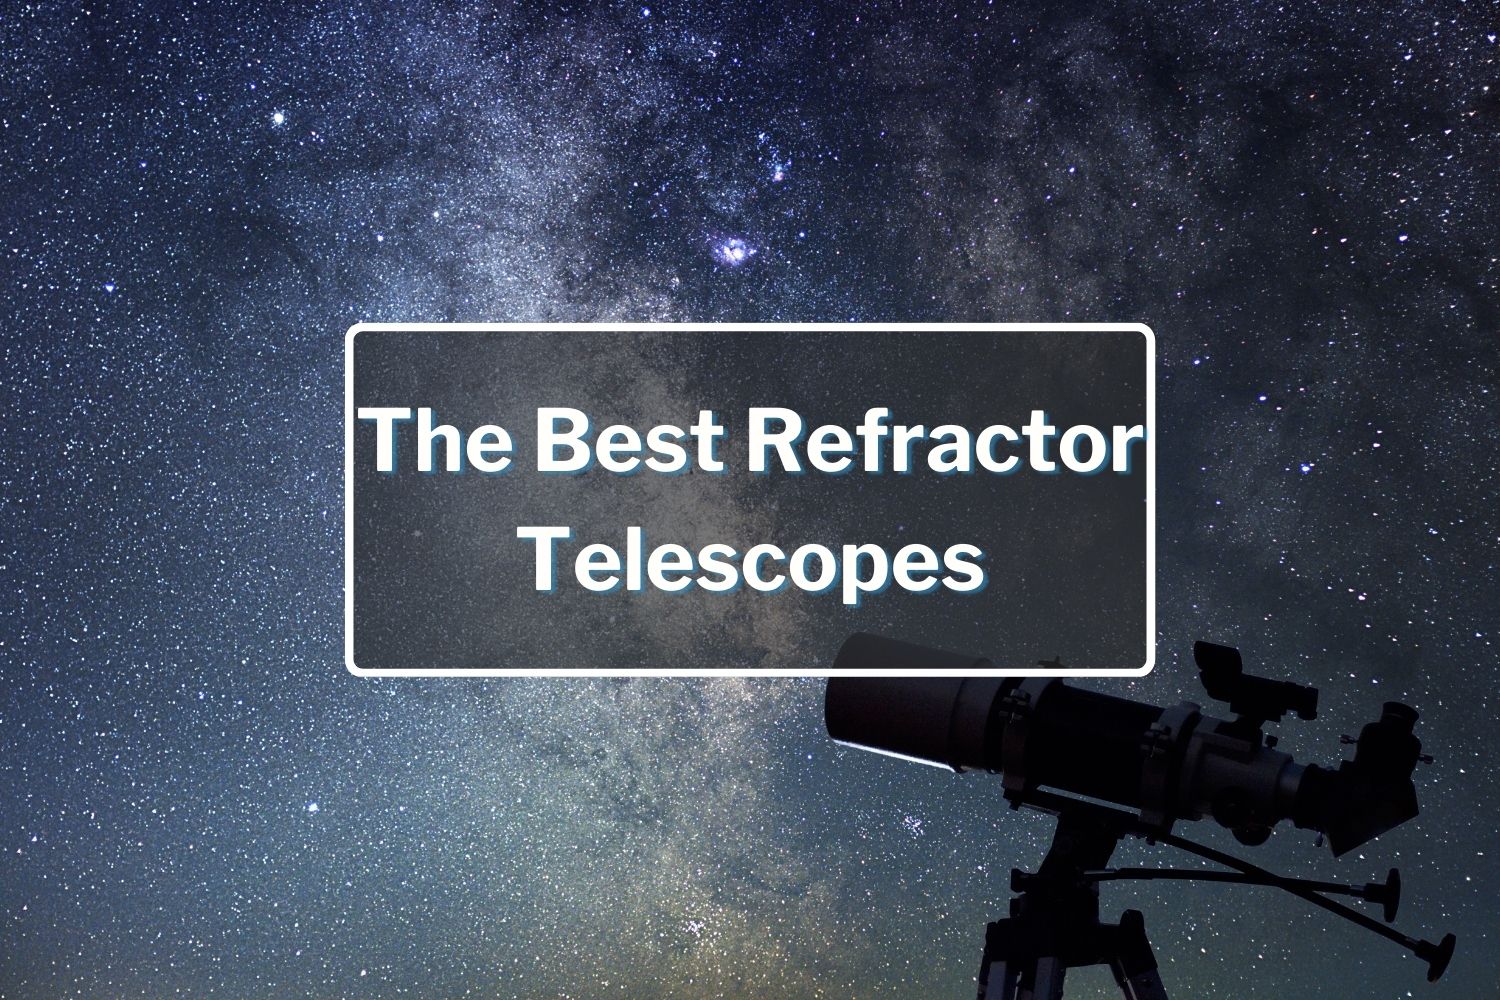 The Best Refractor Telescopes